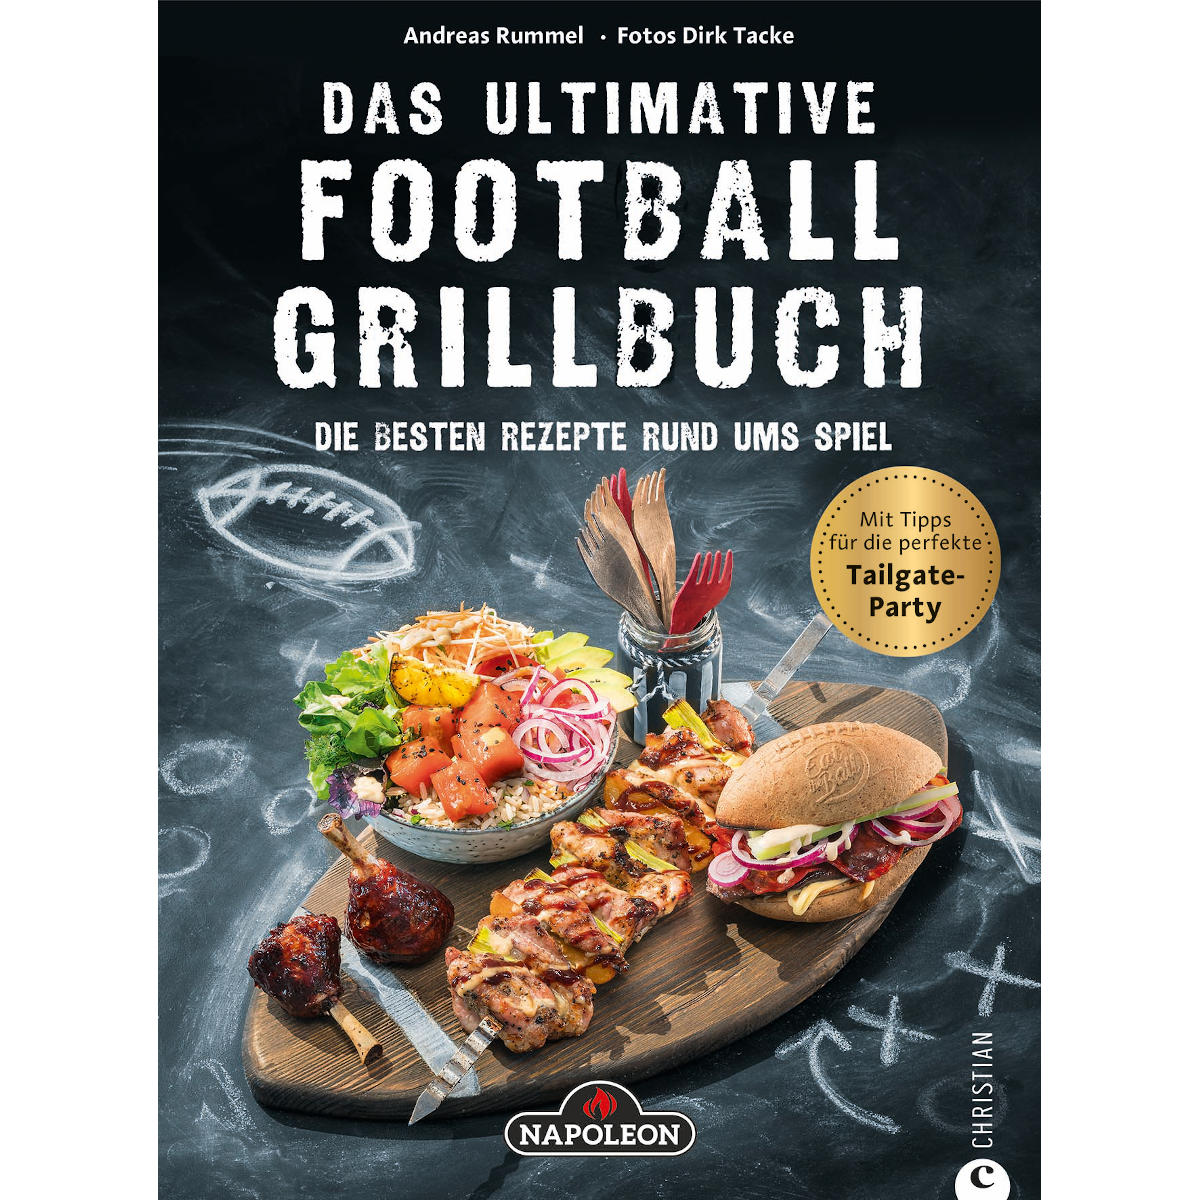 Napoleon Grillbuch "Das ultimative Football-Grillbuch"